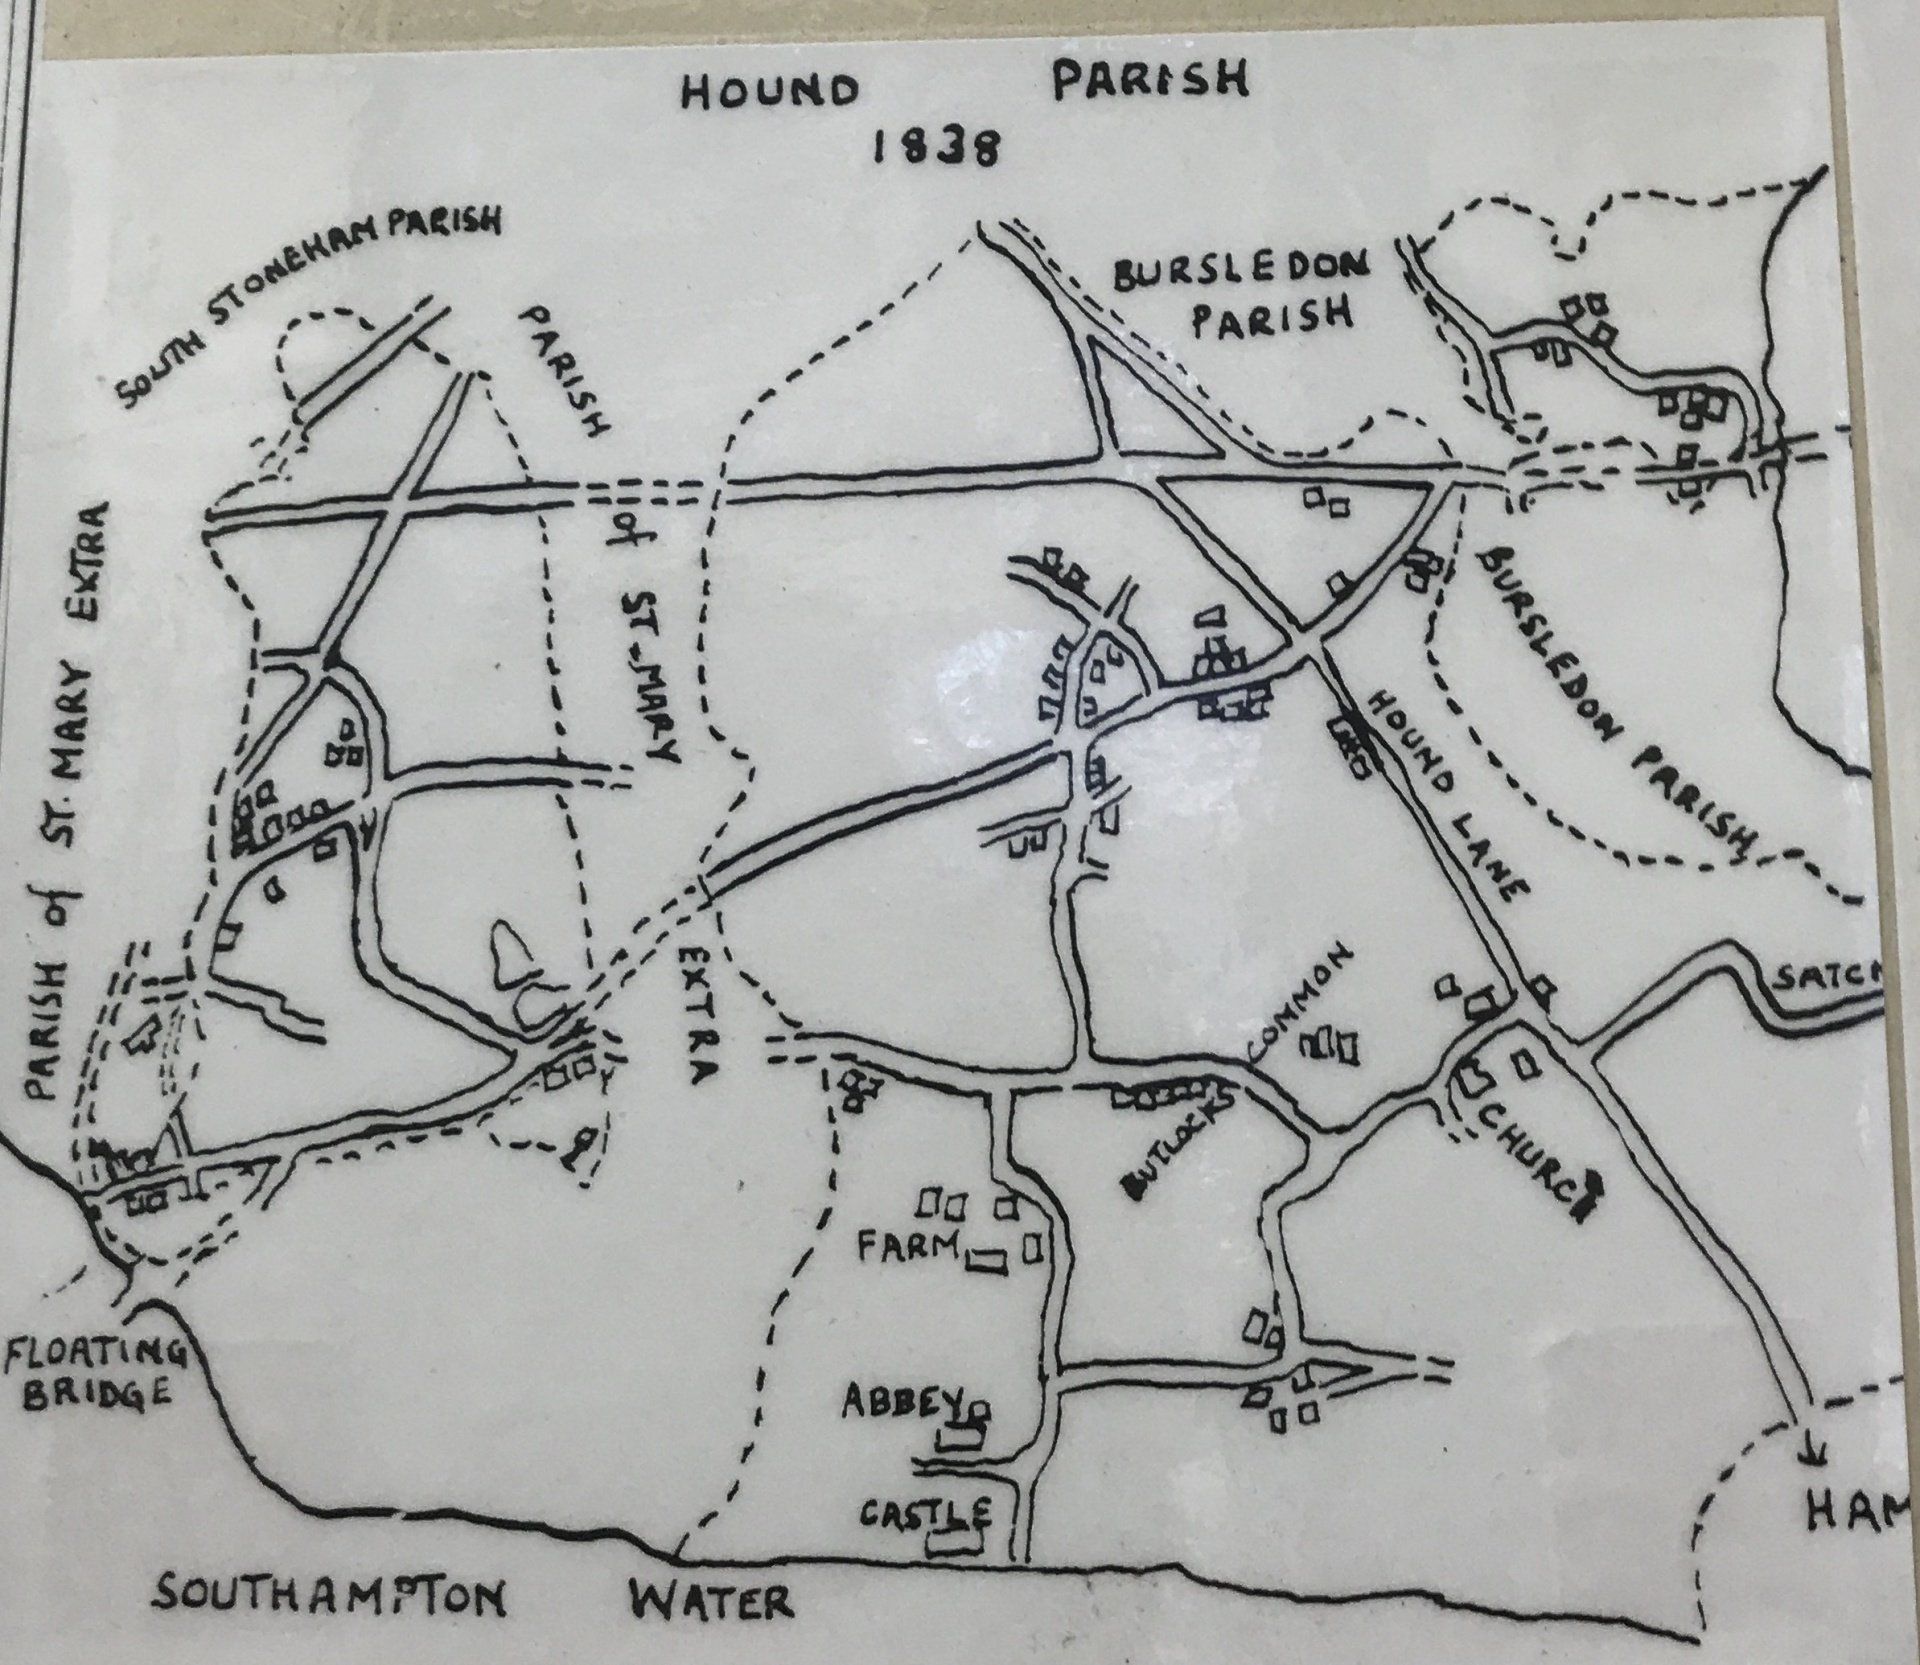 1838 Hound Parish Map